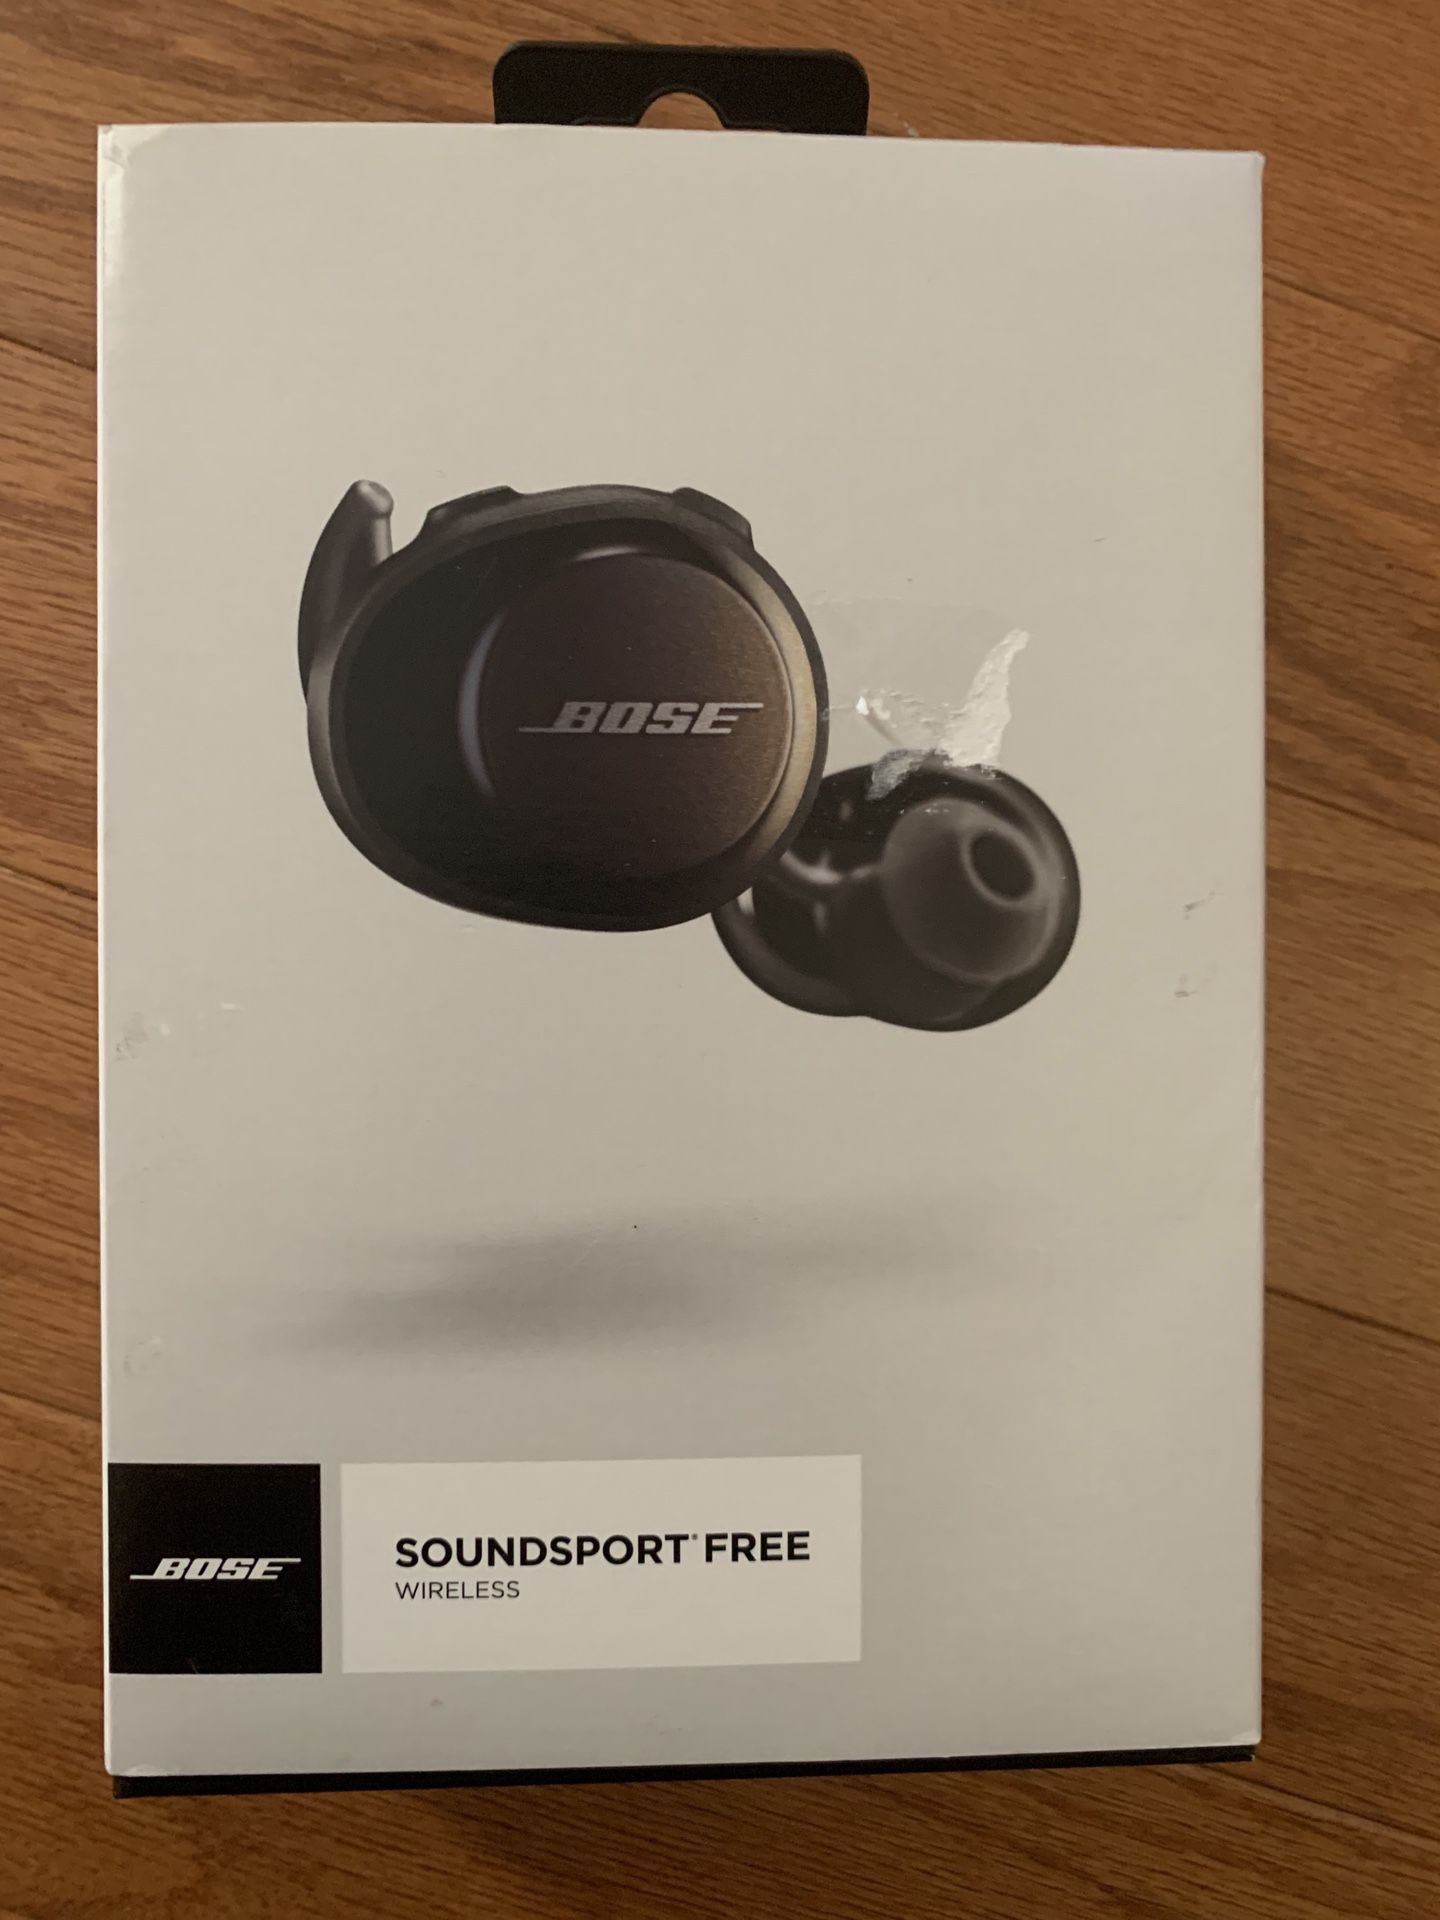 Bose soundsport free wireless headphone